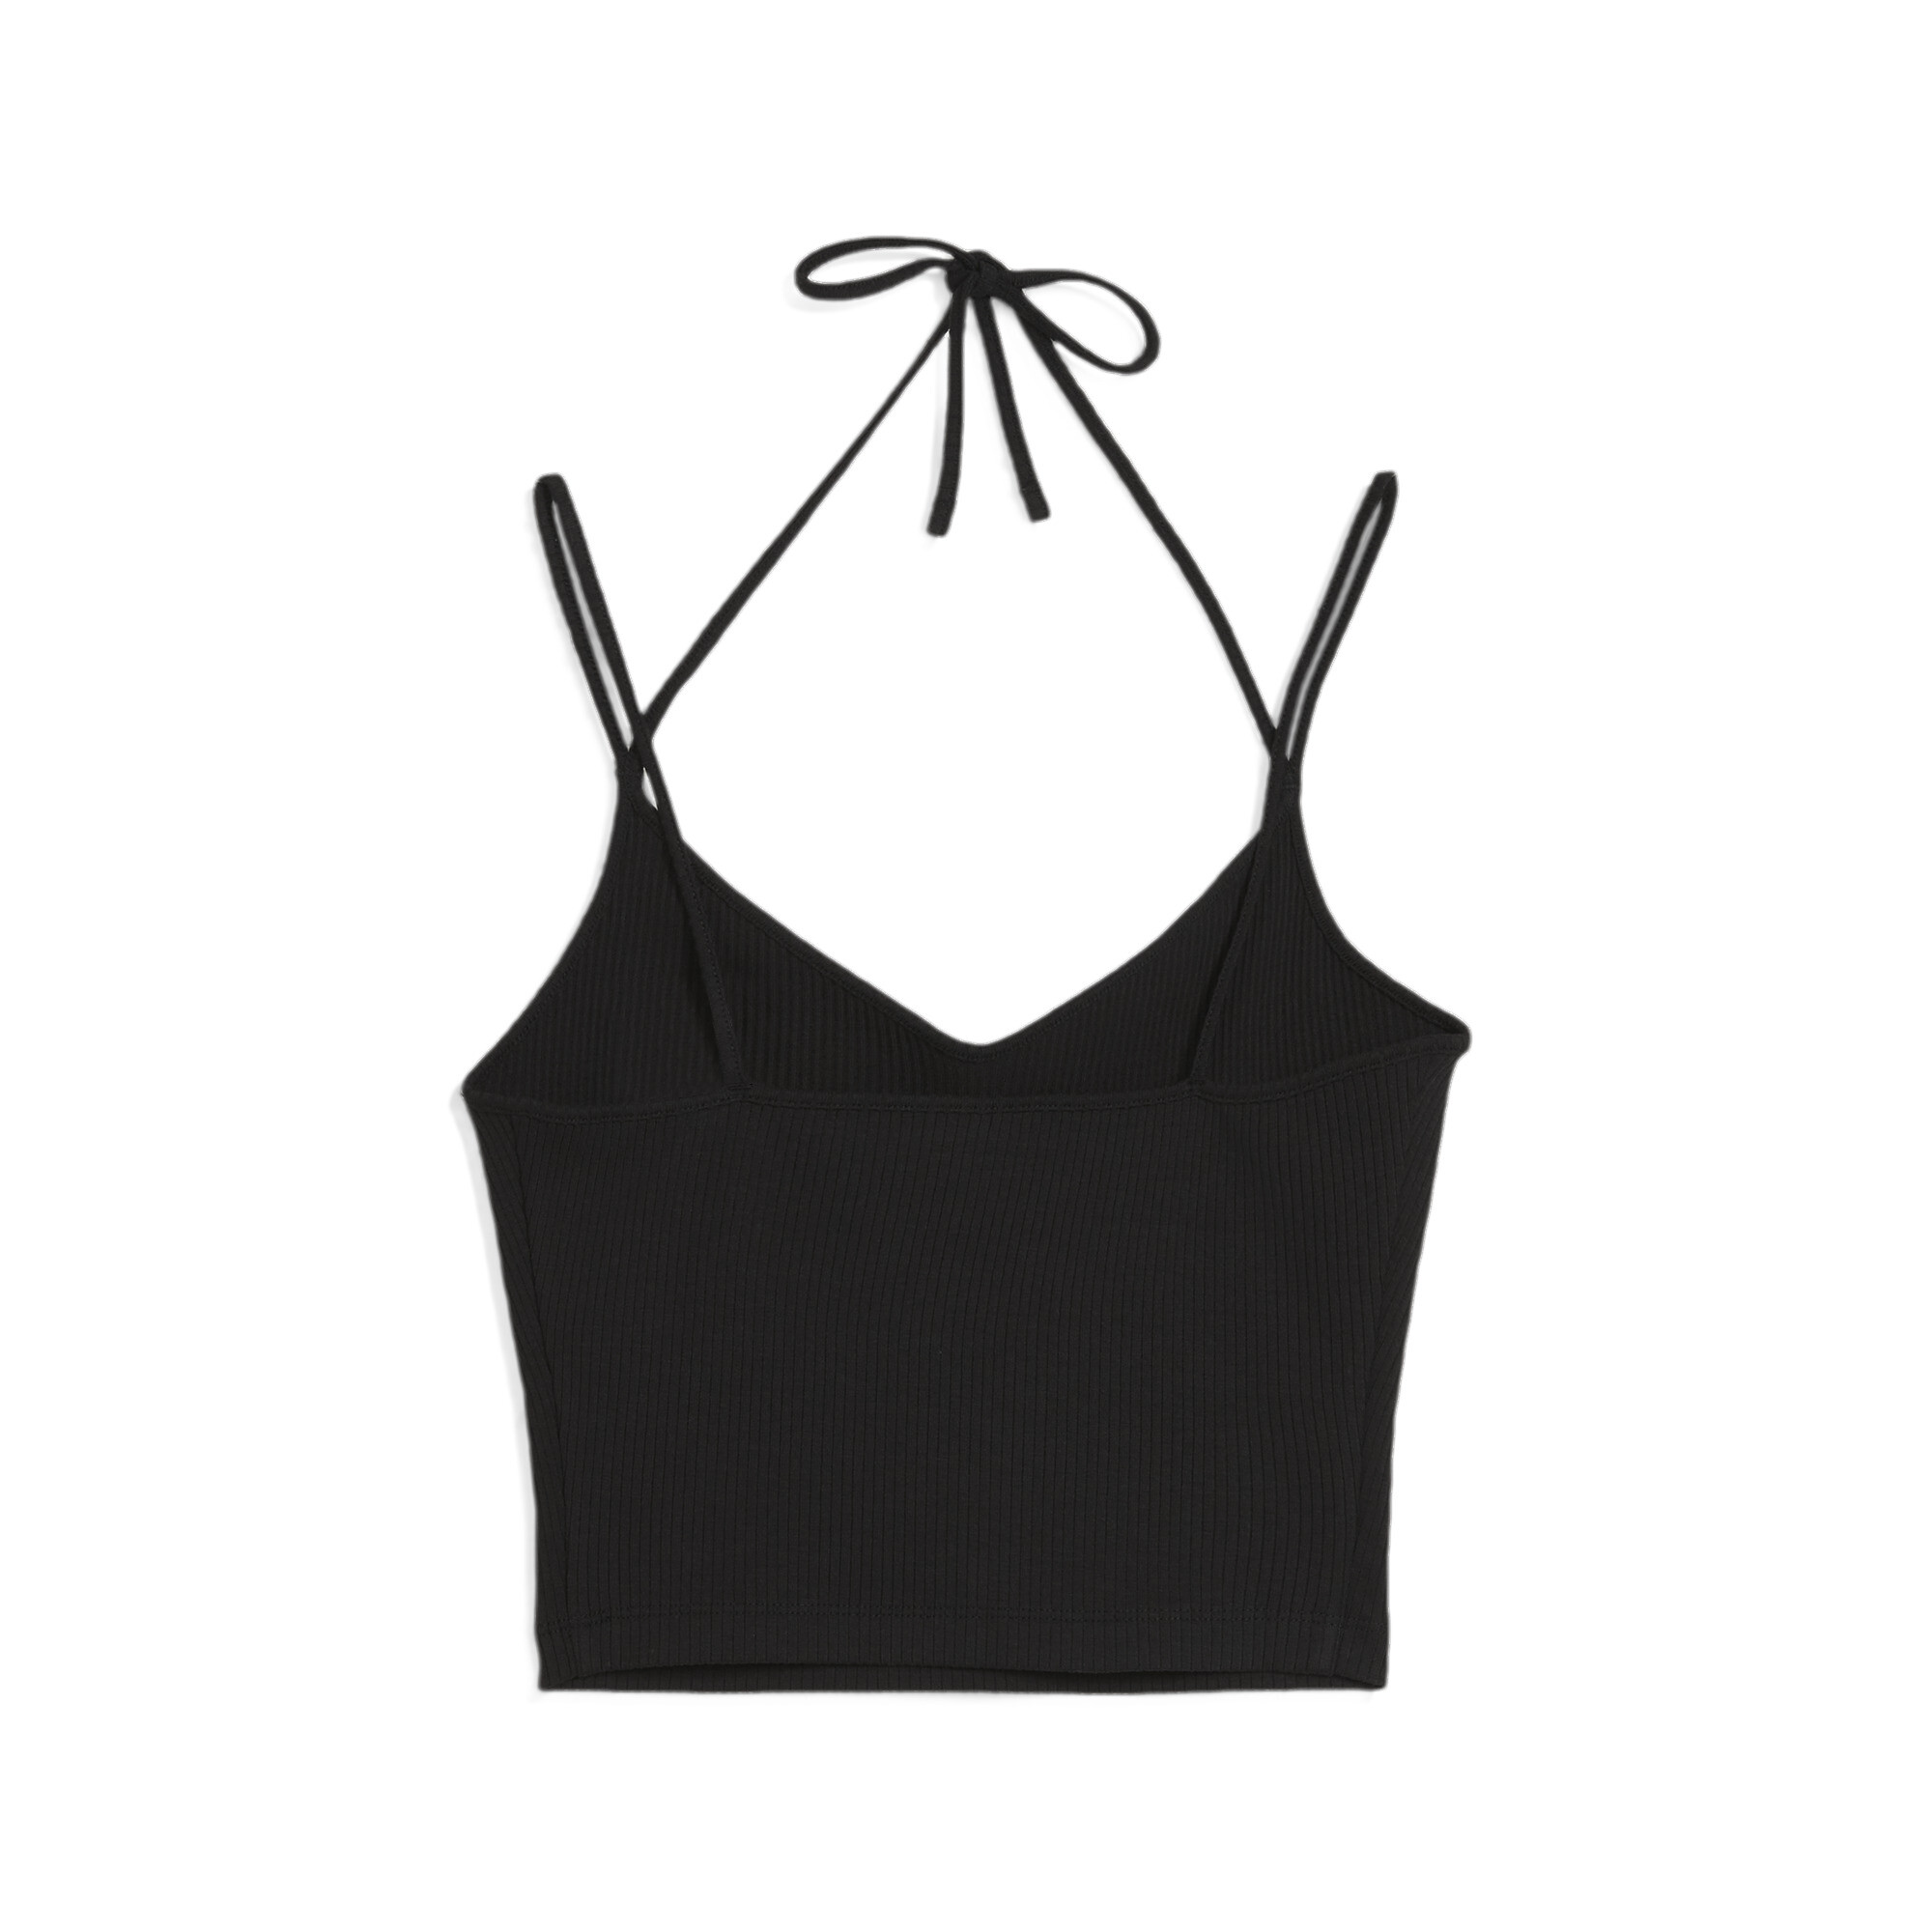 Women's Puma CLASSICS Ribbed Crop Top, Black, Size XXL, Clothing